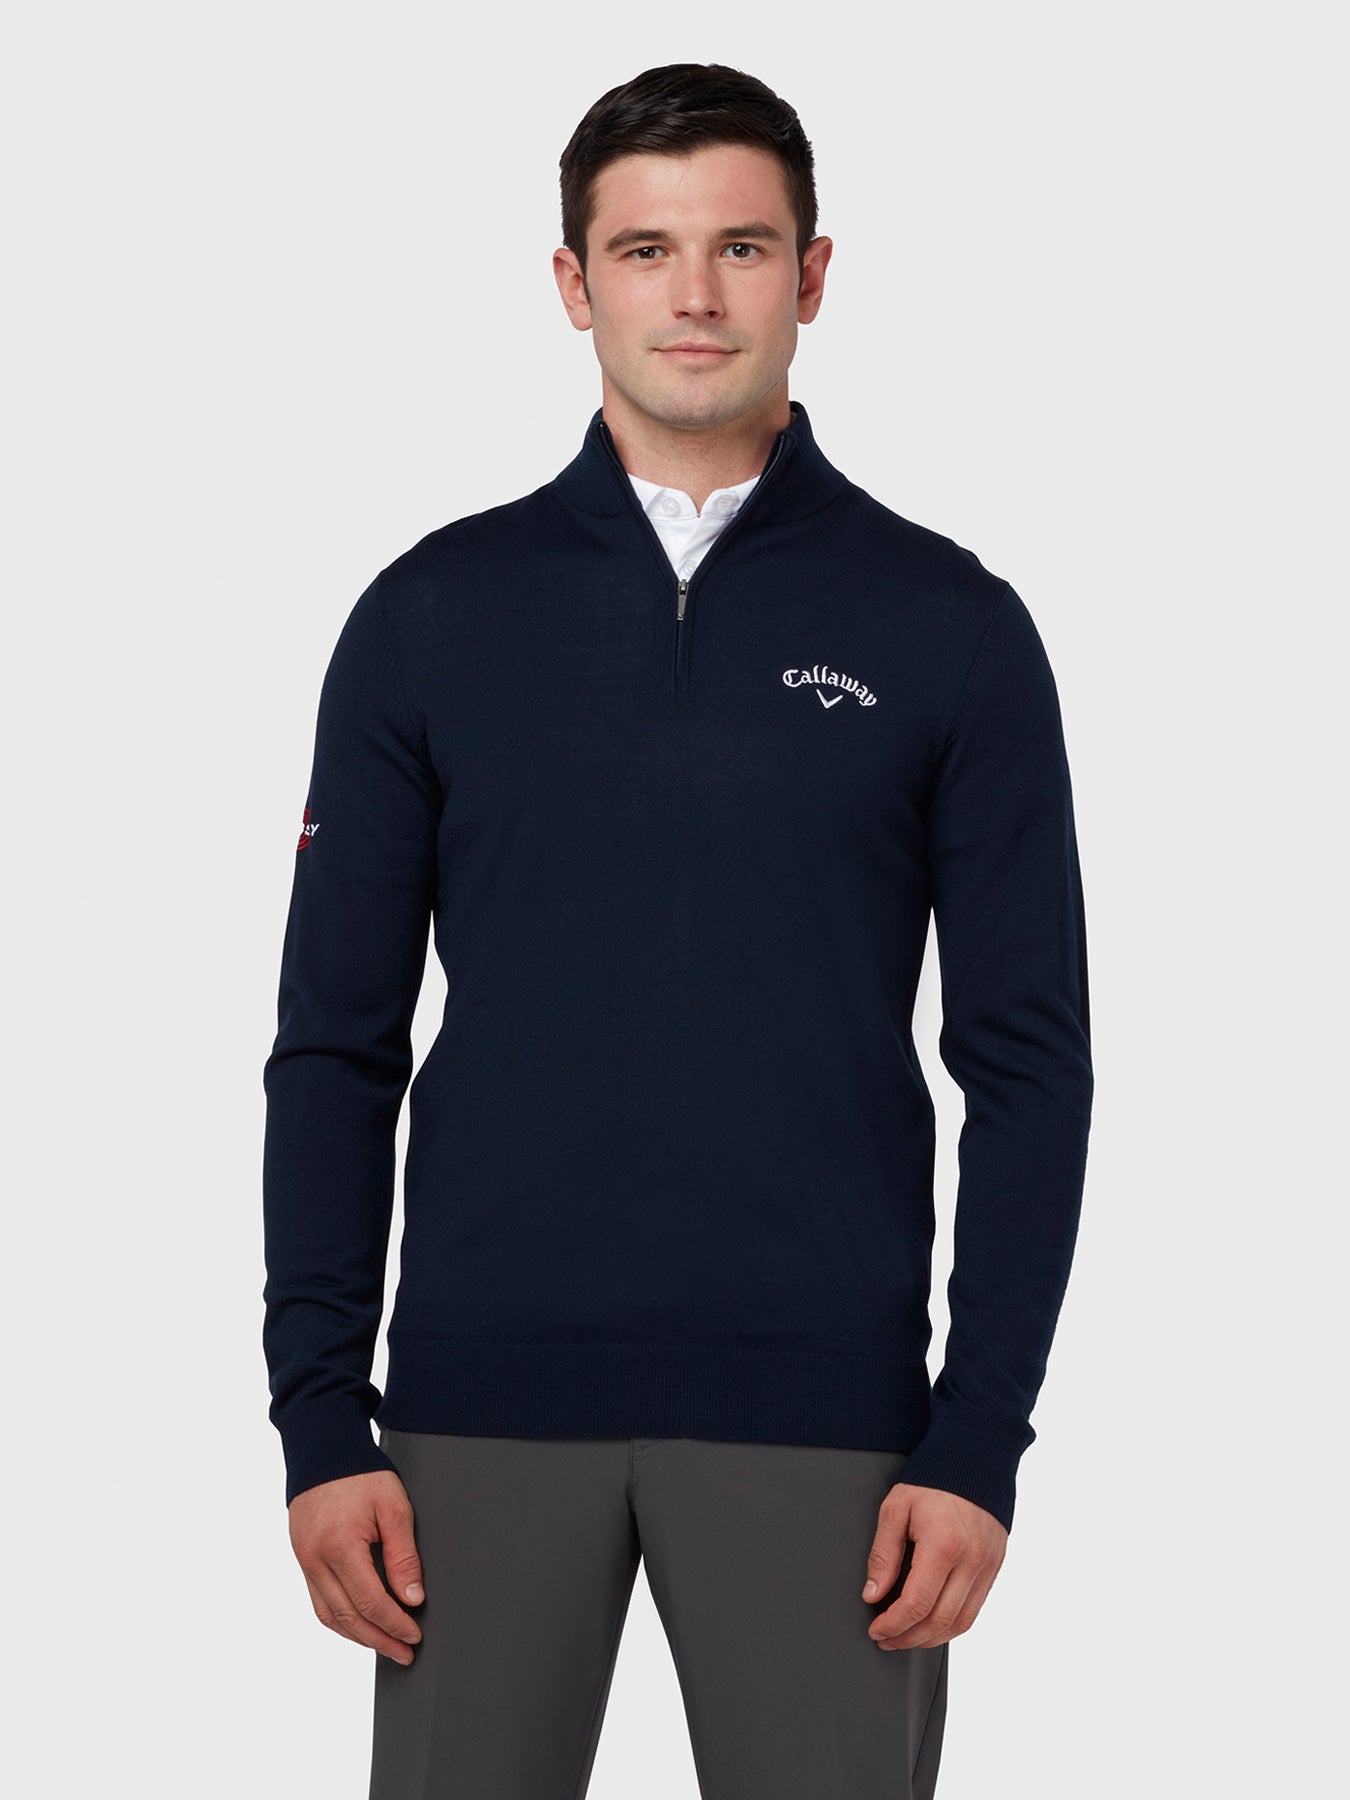 View Quarter Zip Blended Merino Sweater In Navy Blue Navy Blue S information